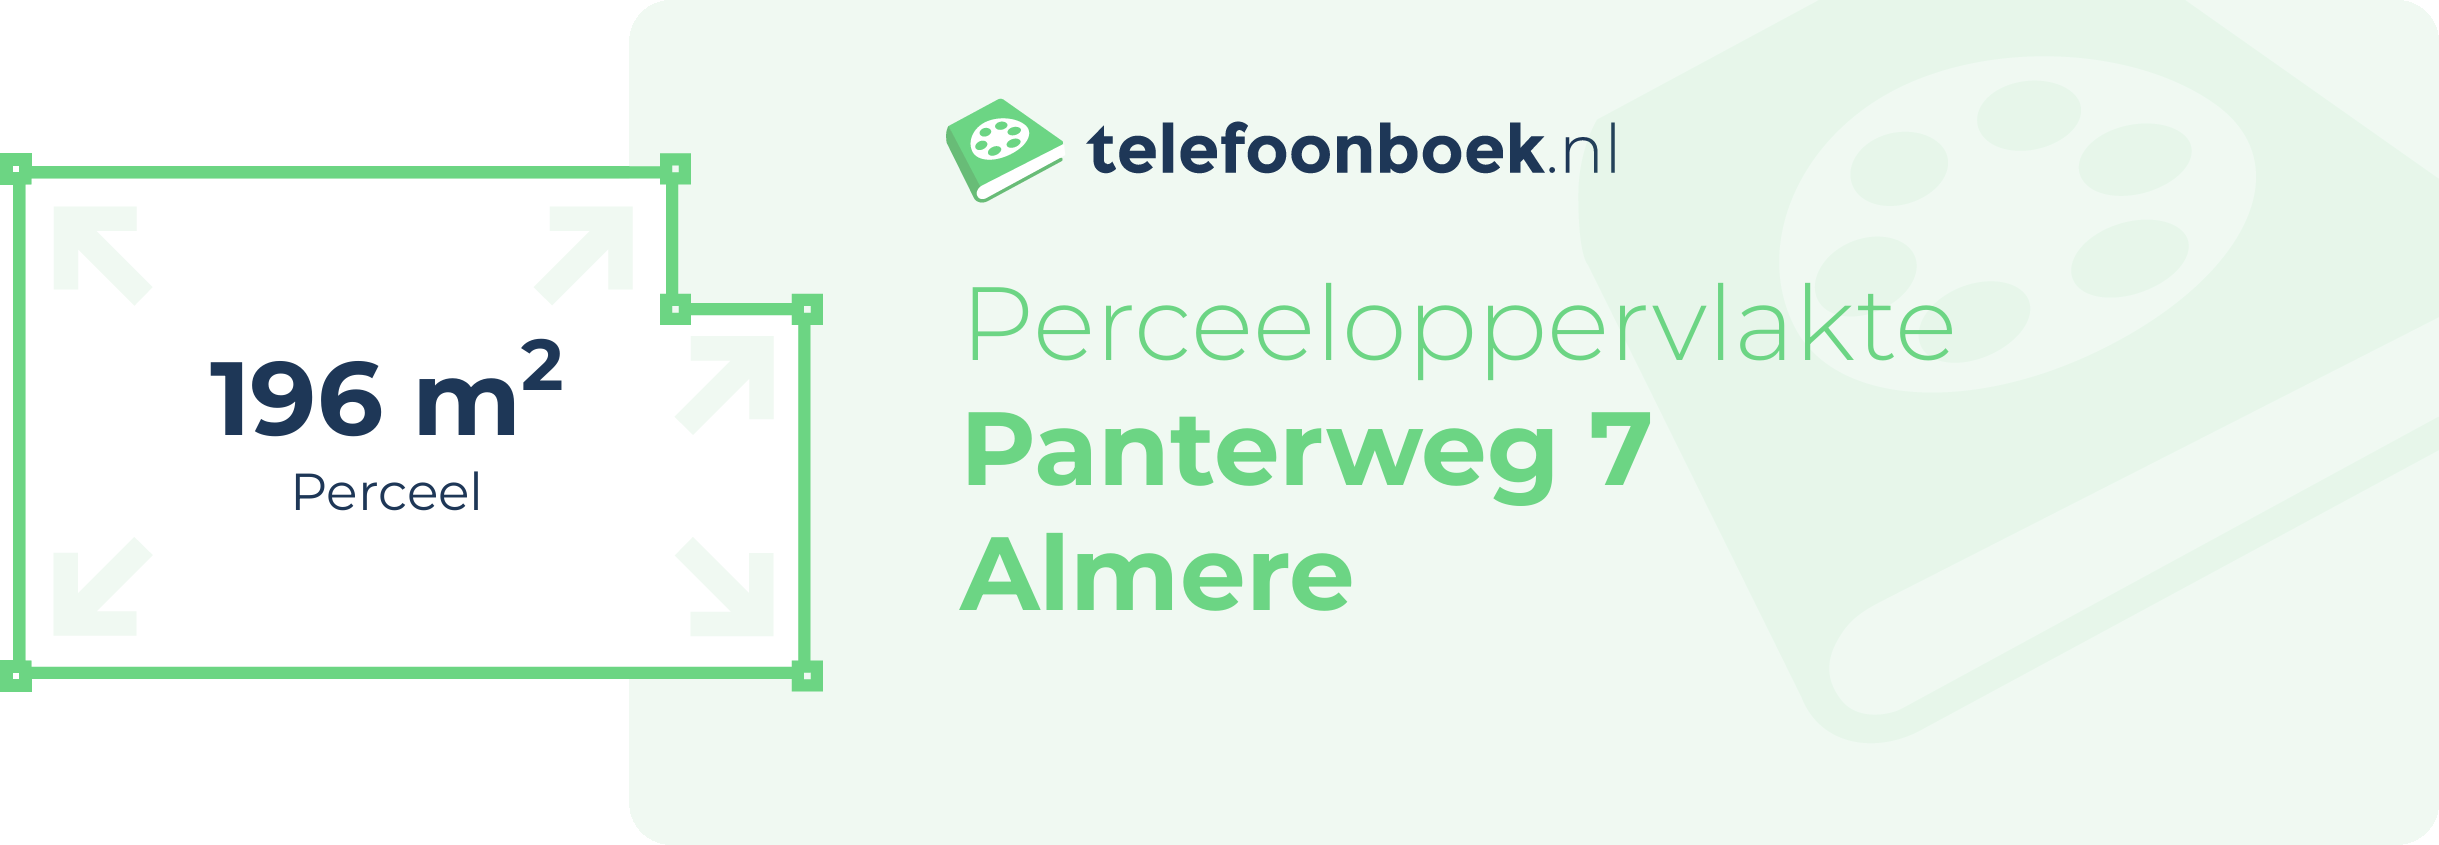 Perceeloppervlakte Panterweg 7 Almere